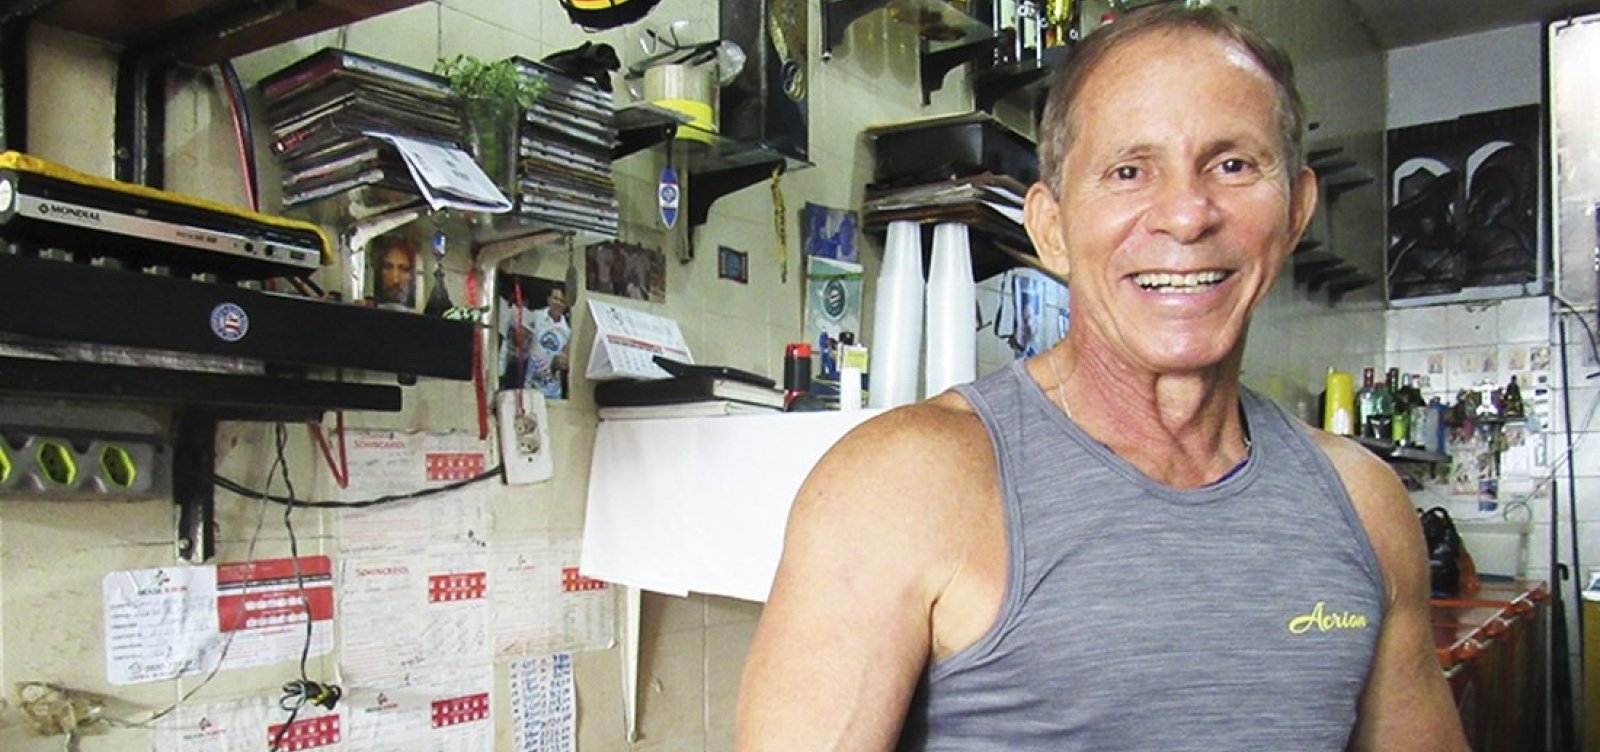 Morre Thyrso, ex-jogador do Bahia e dono de bar no Campo Grande